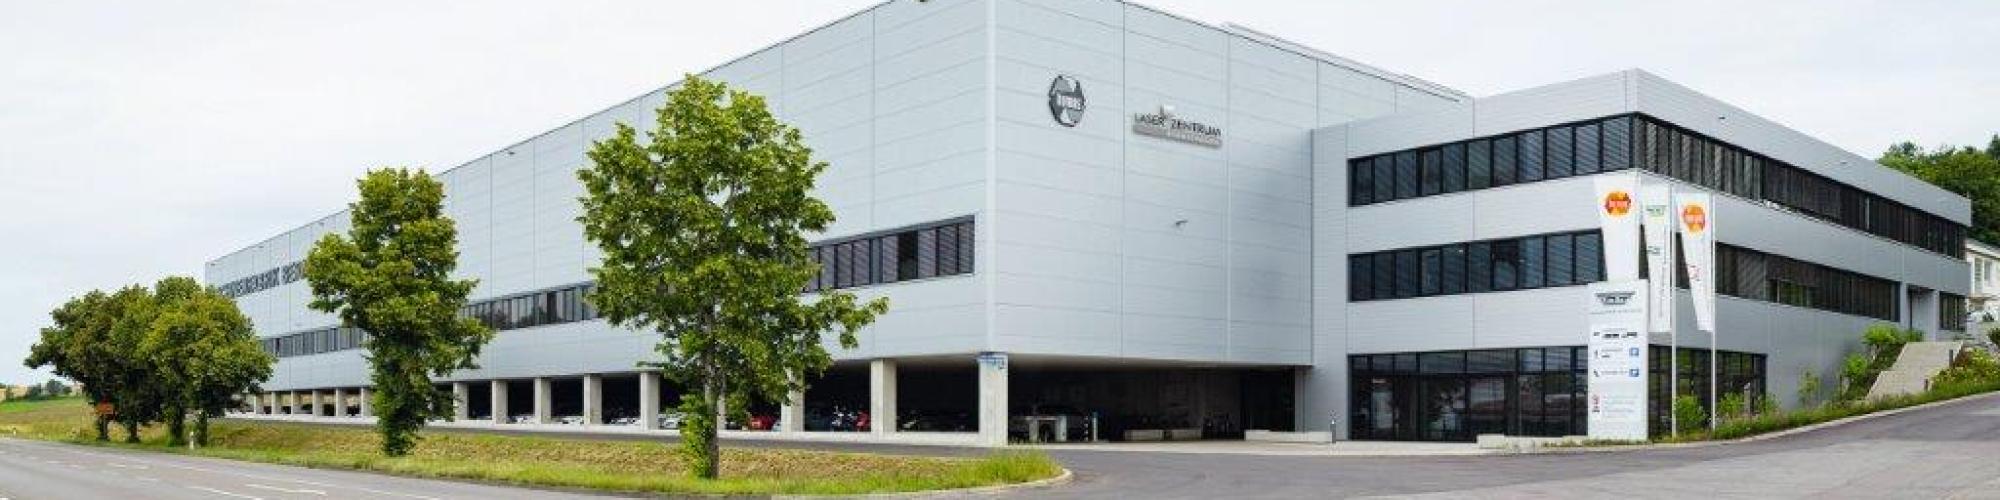 Maschinenfabrik Bermatingen GmbH & Co. KG